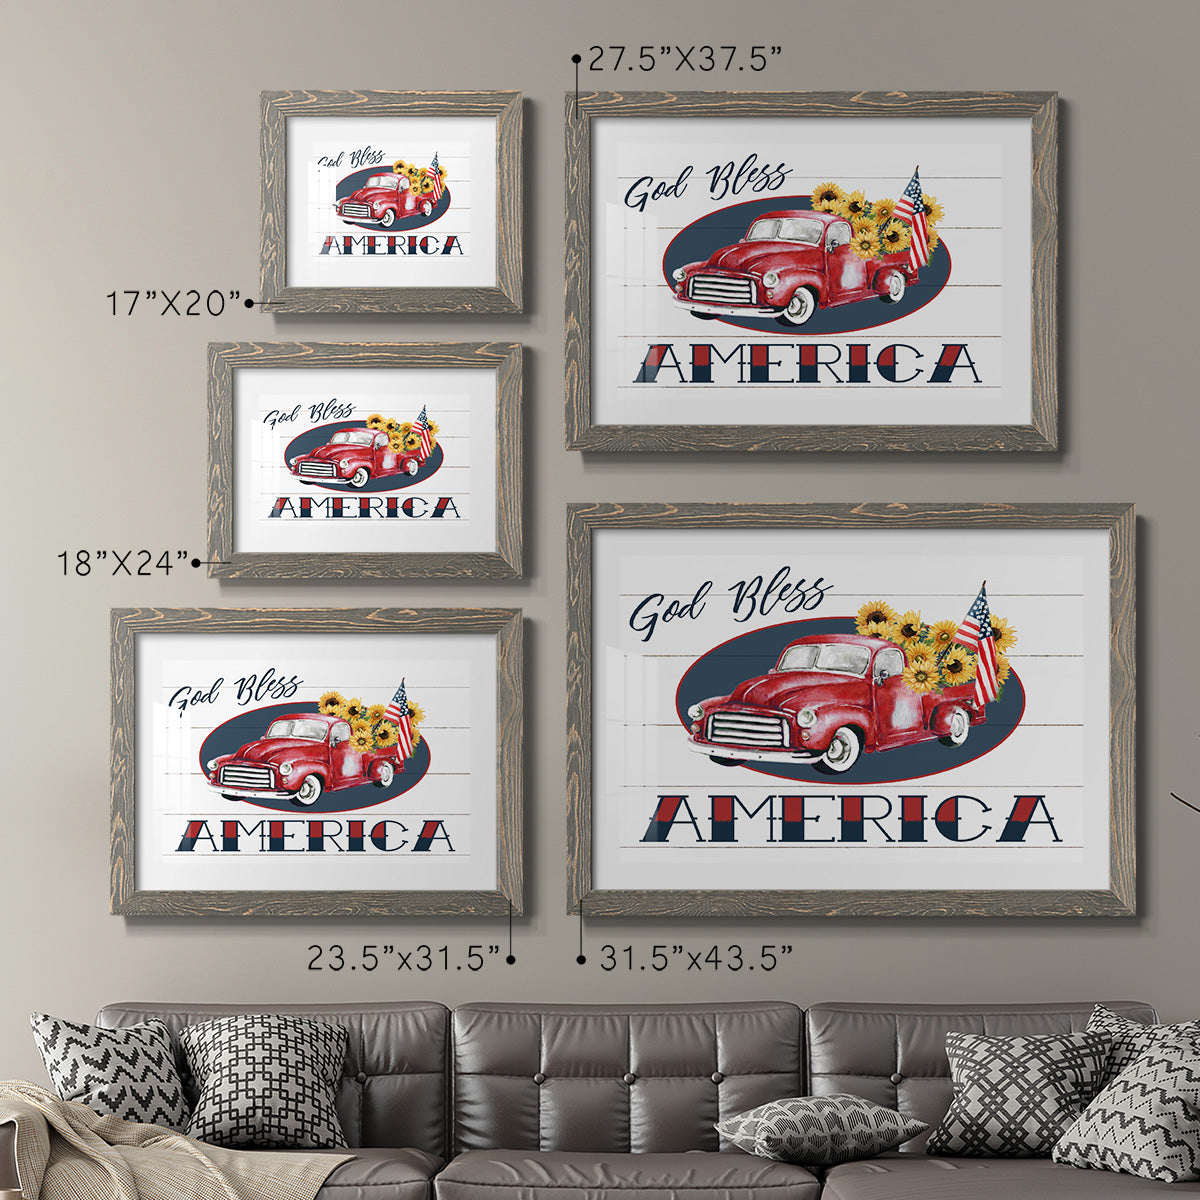 God Bless America Truck-Premium Framed Print - Ready to Hang